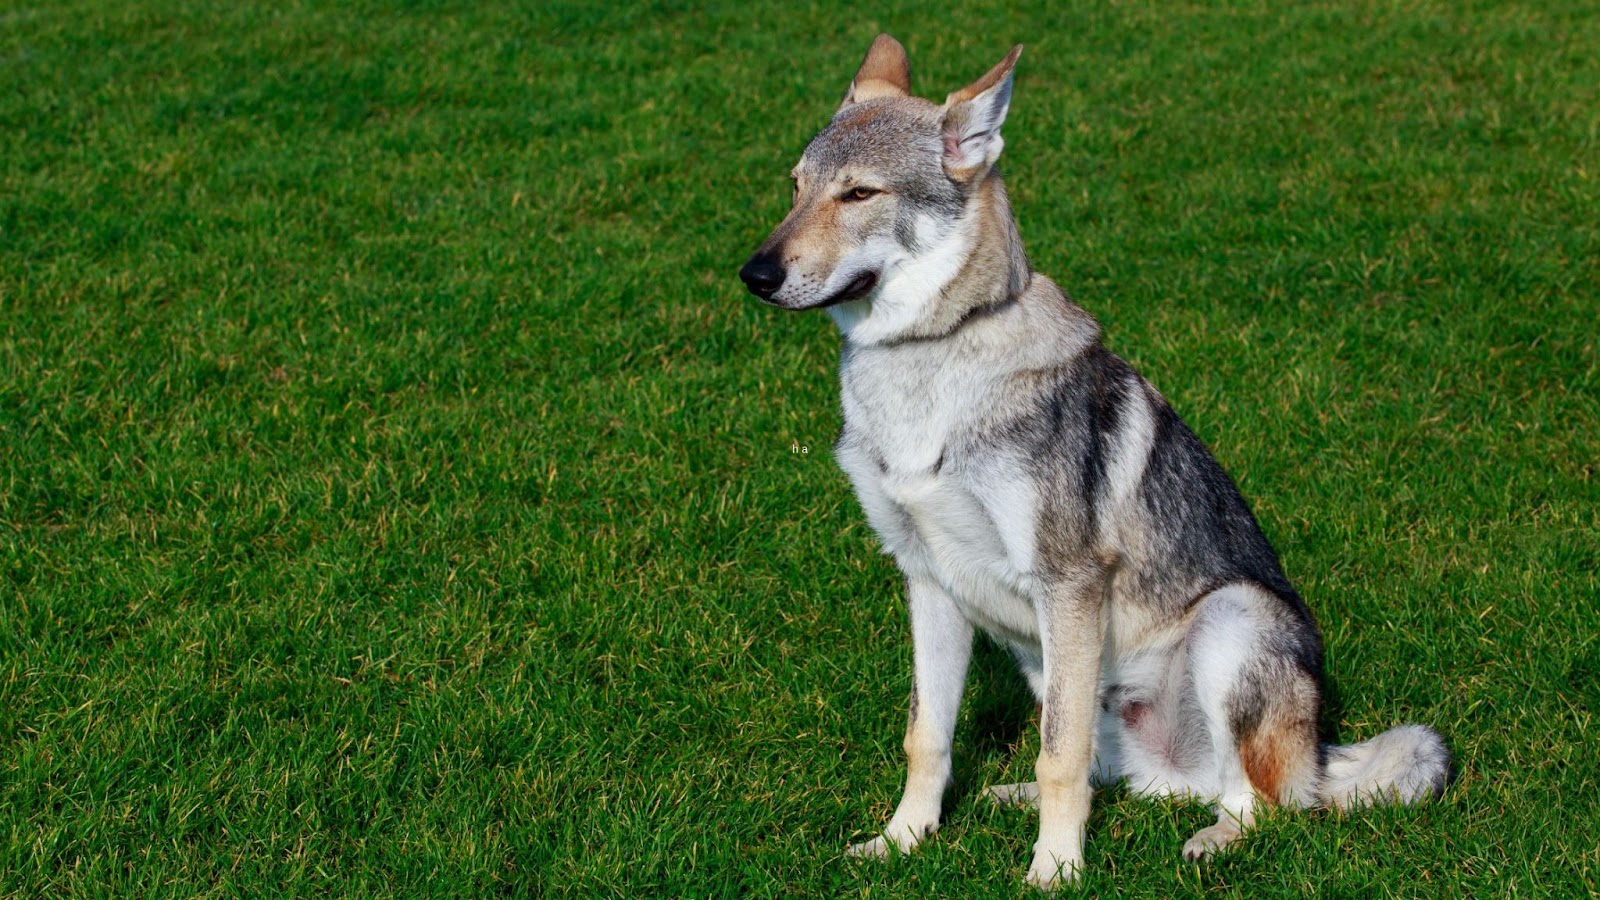 Czechoslovakian Wolfdog sitting on grass